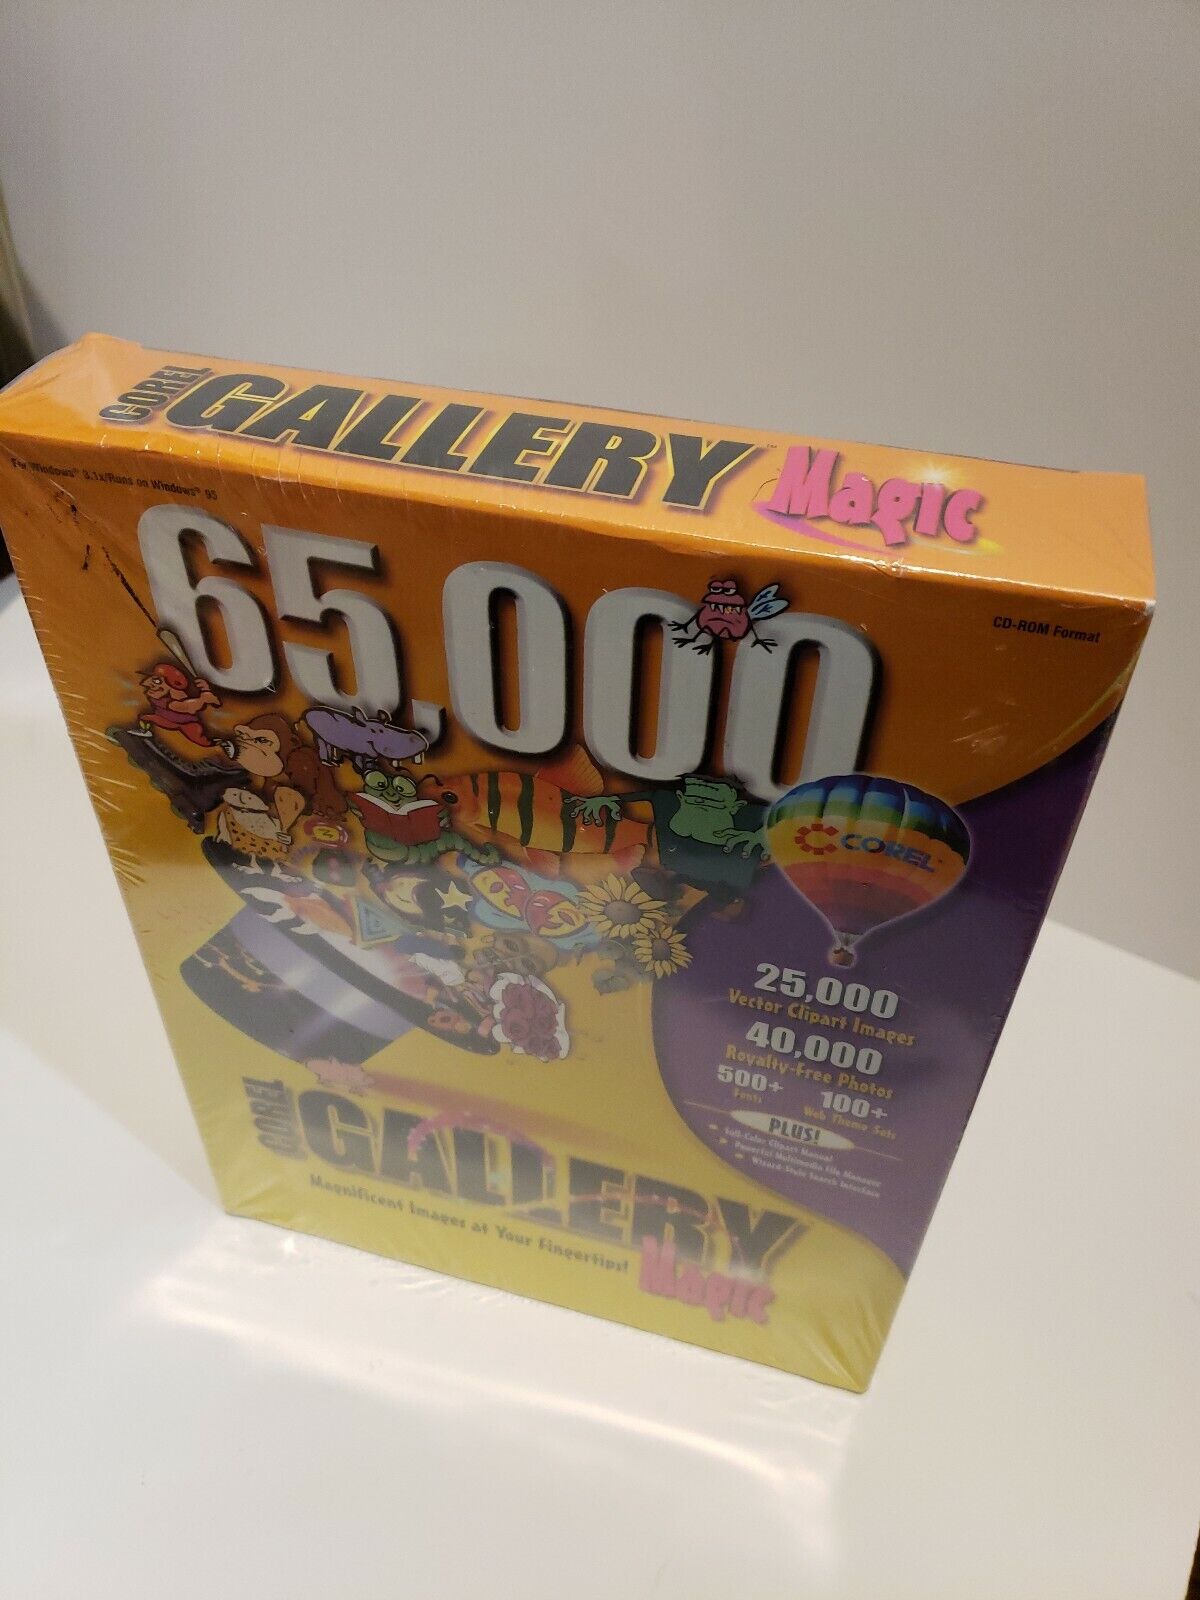 Corel Gallery Magic 65,000 PC New In Original box and Seal